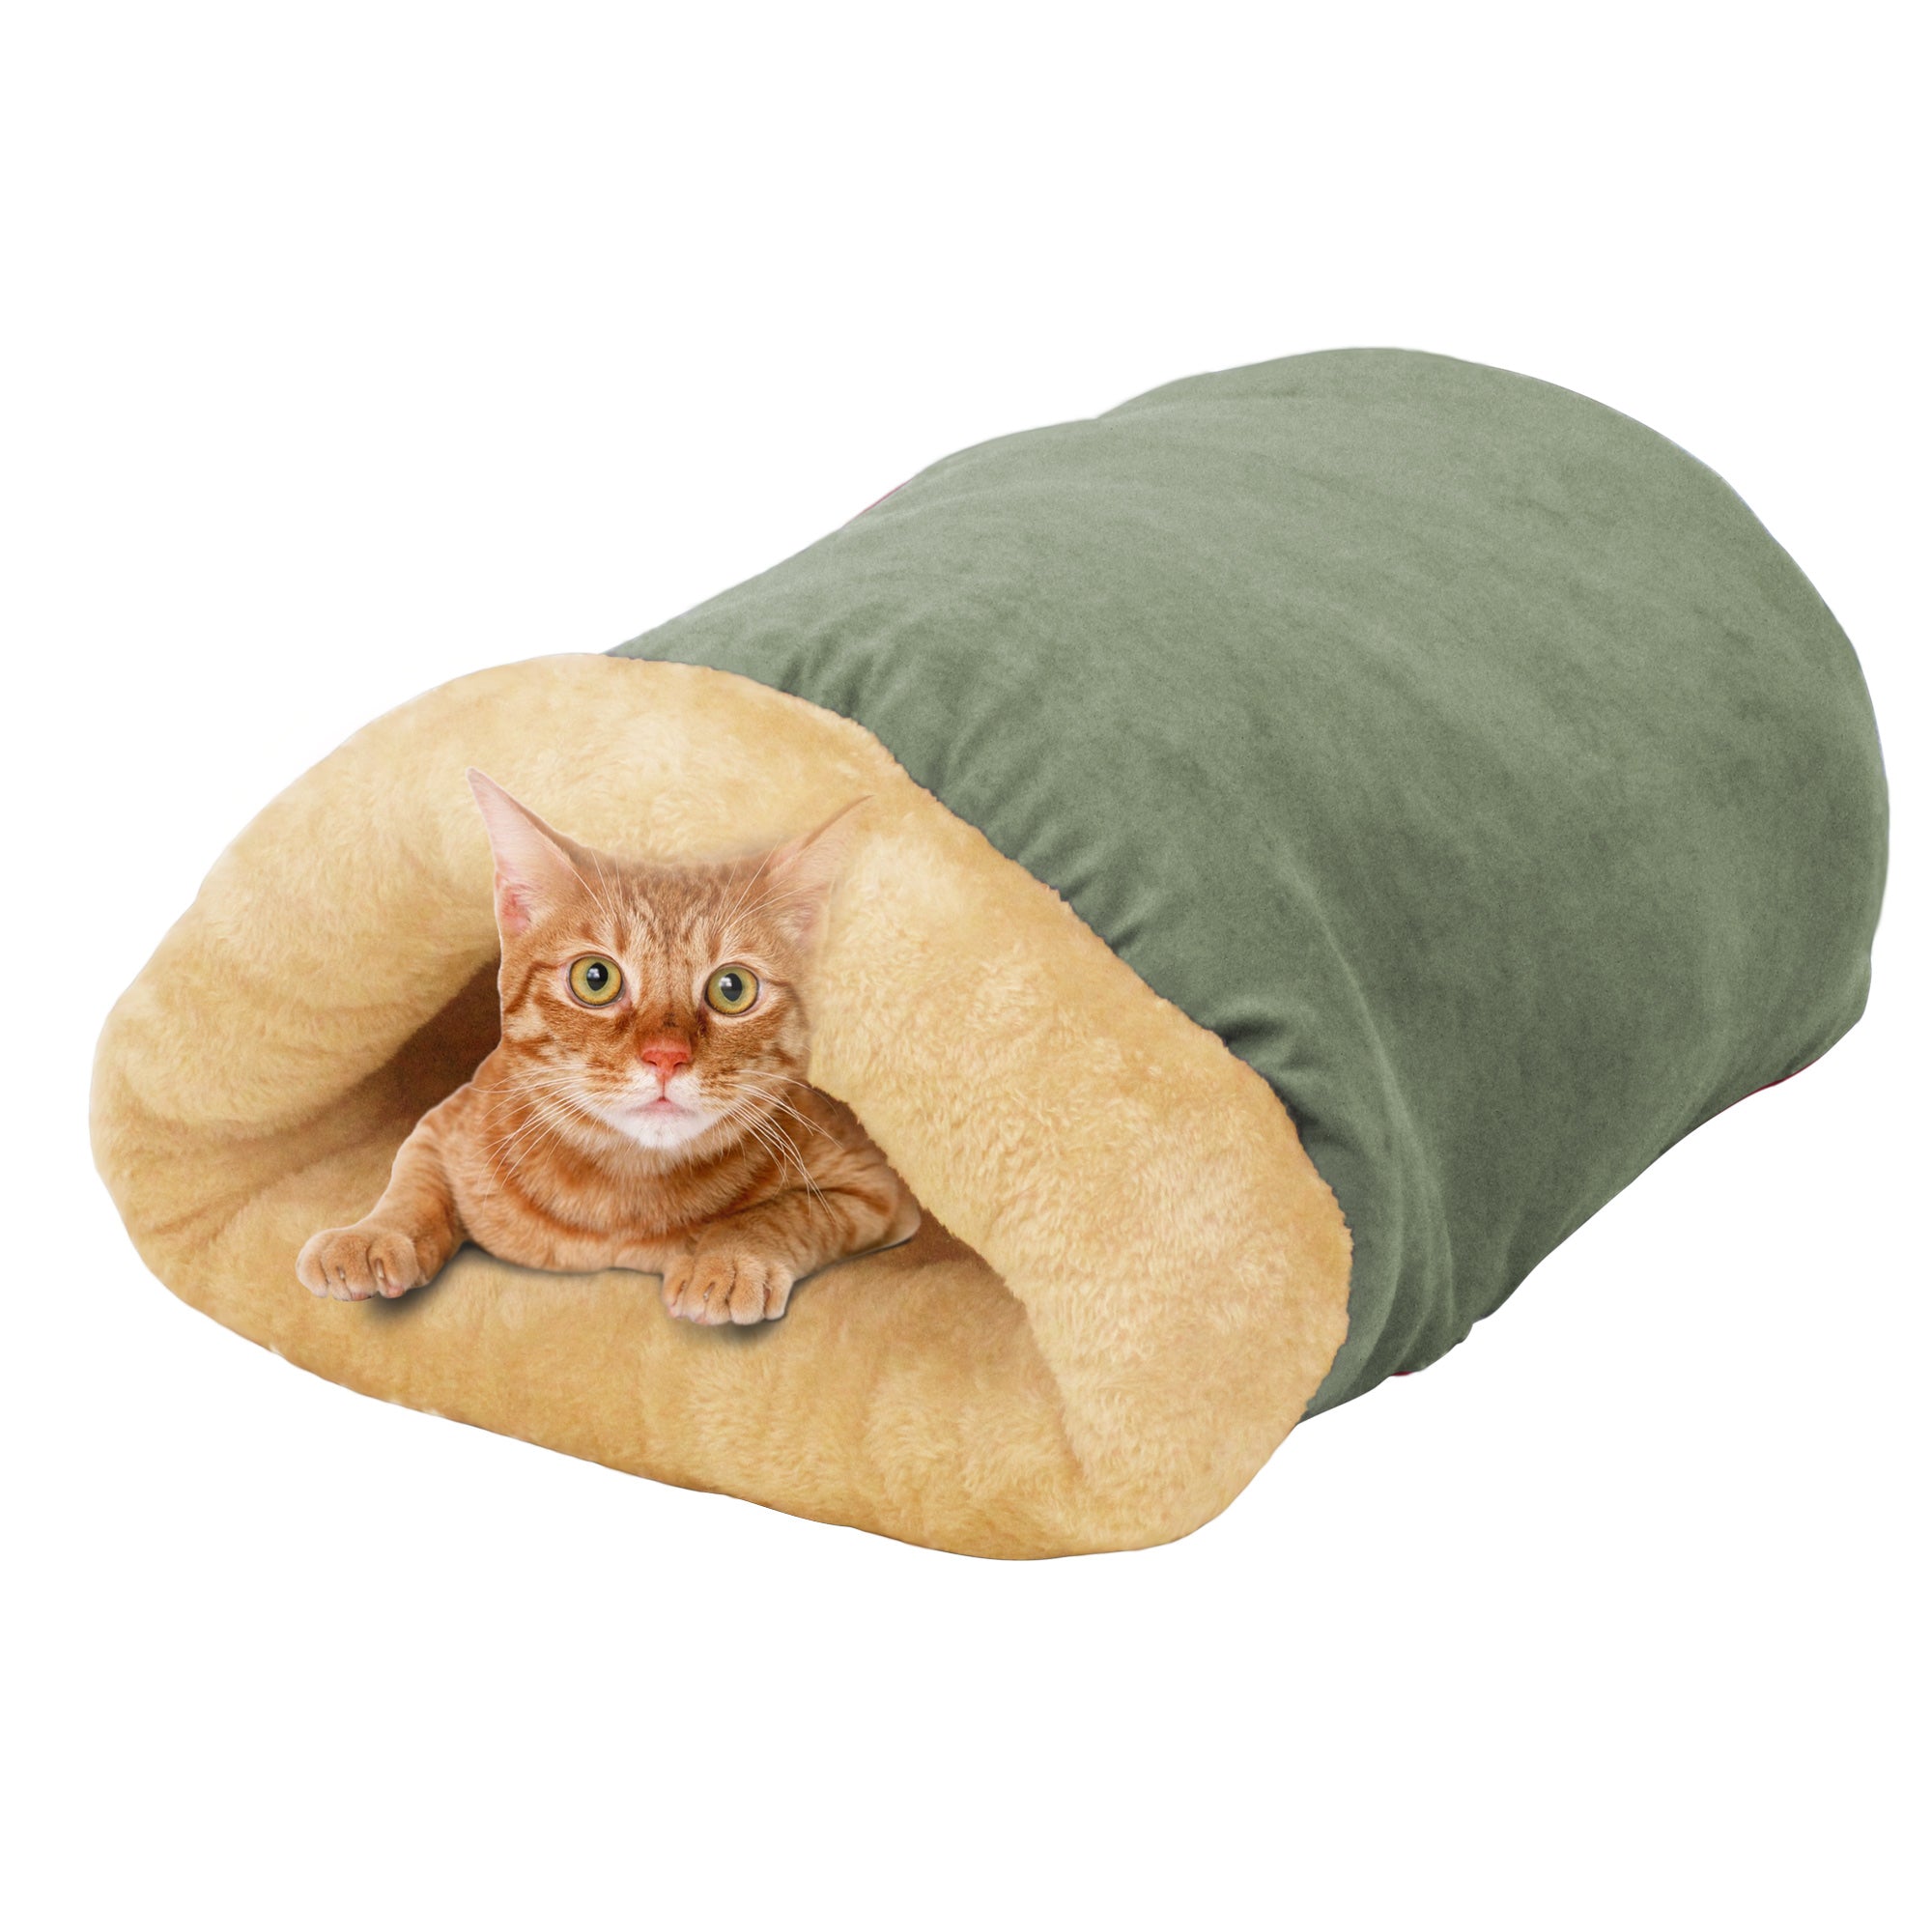 GOOPAWS 4 in 1 Self Warming Burrow Cat Bed Sleeping Cave, Sage Green